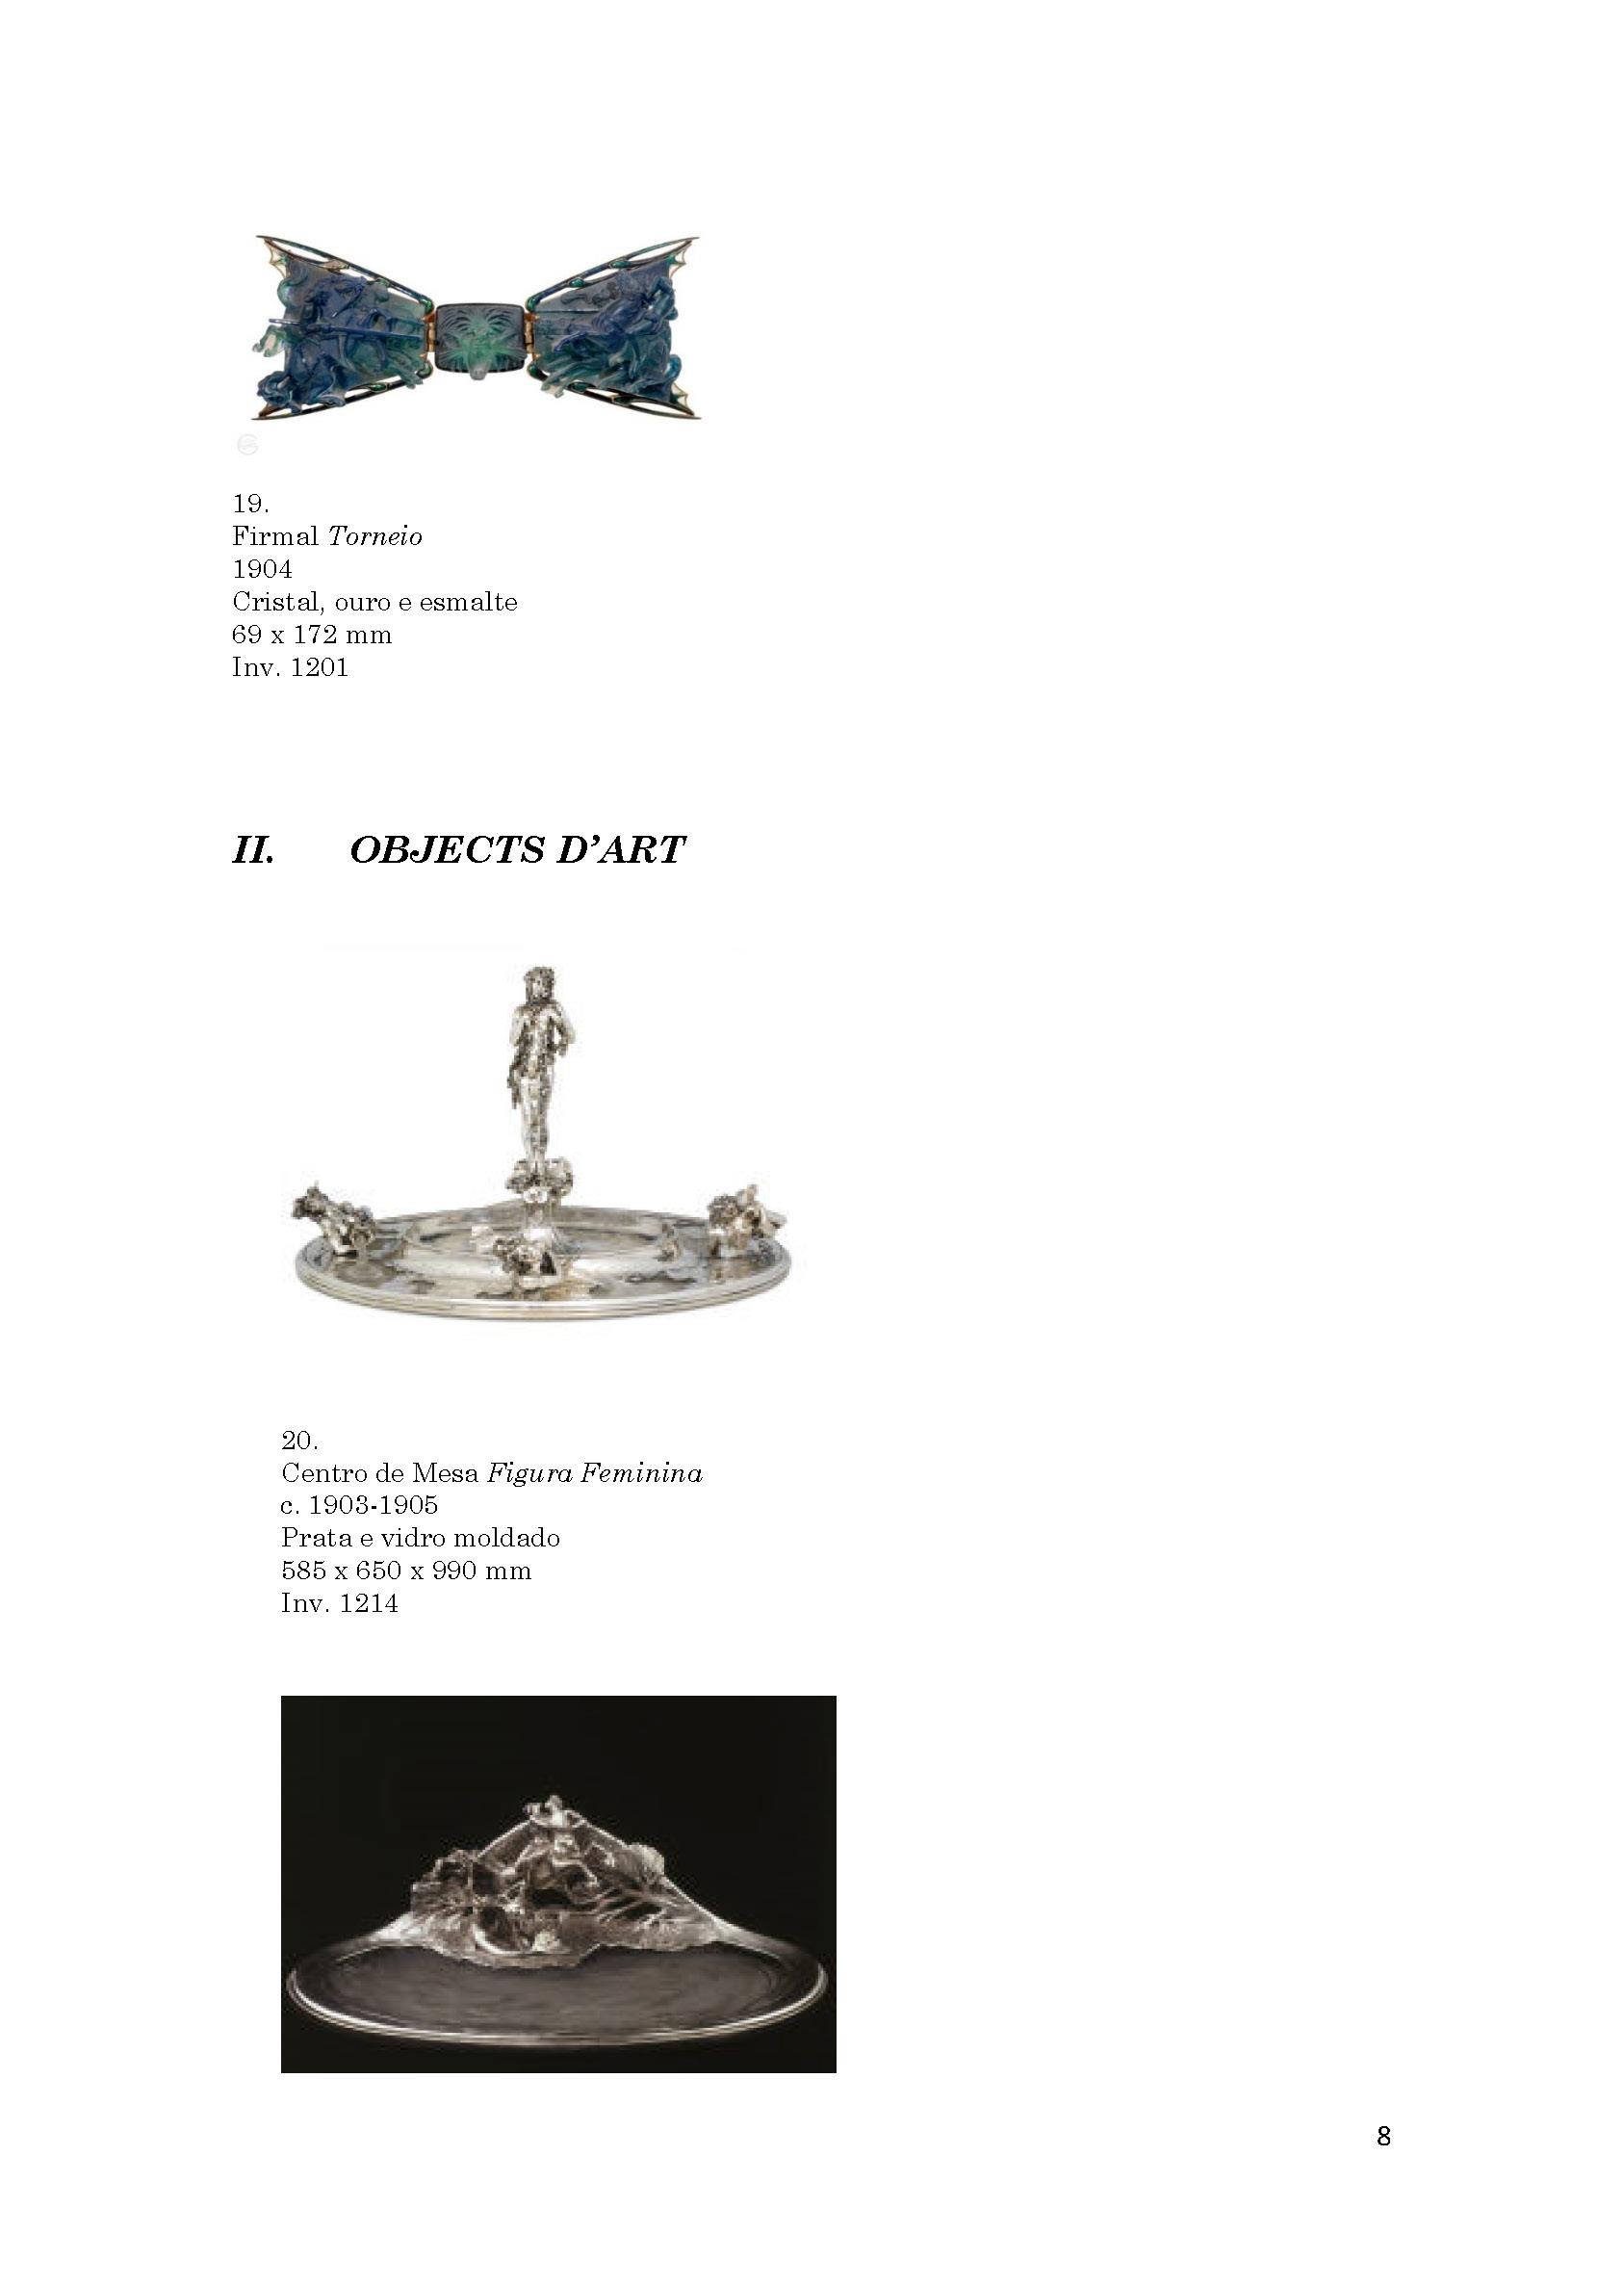 Lista_Vidros_Lalique_25.09.2020_1.8